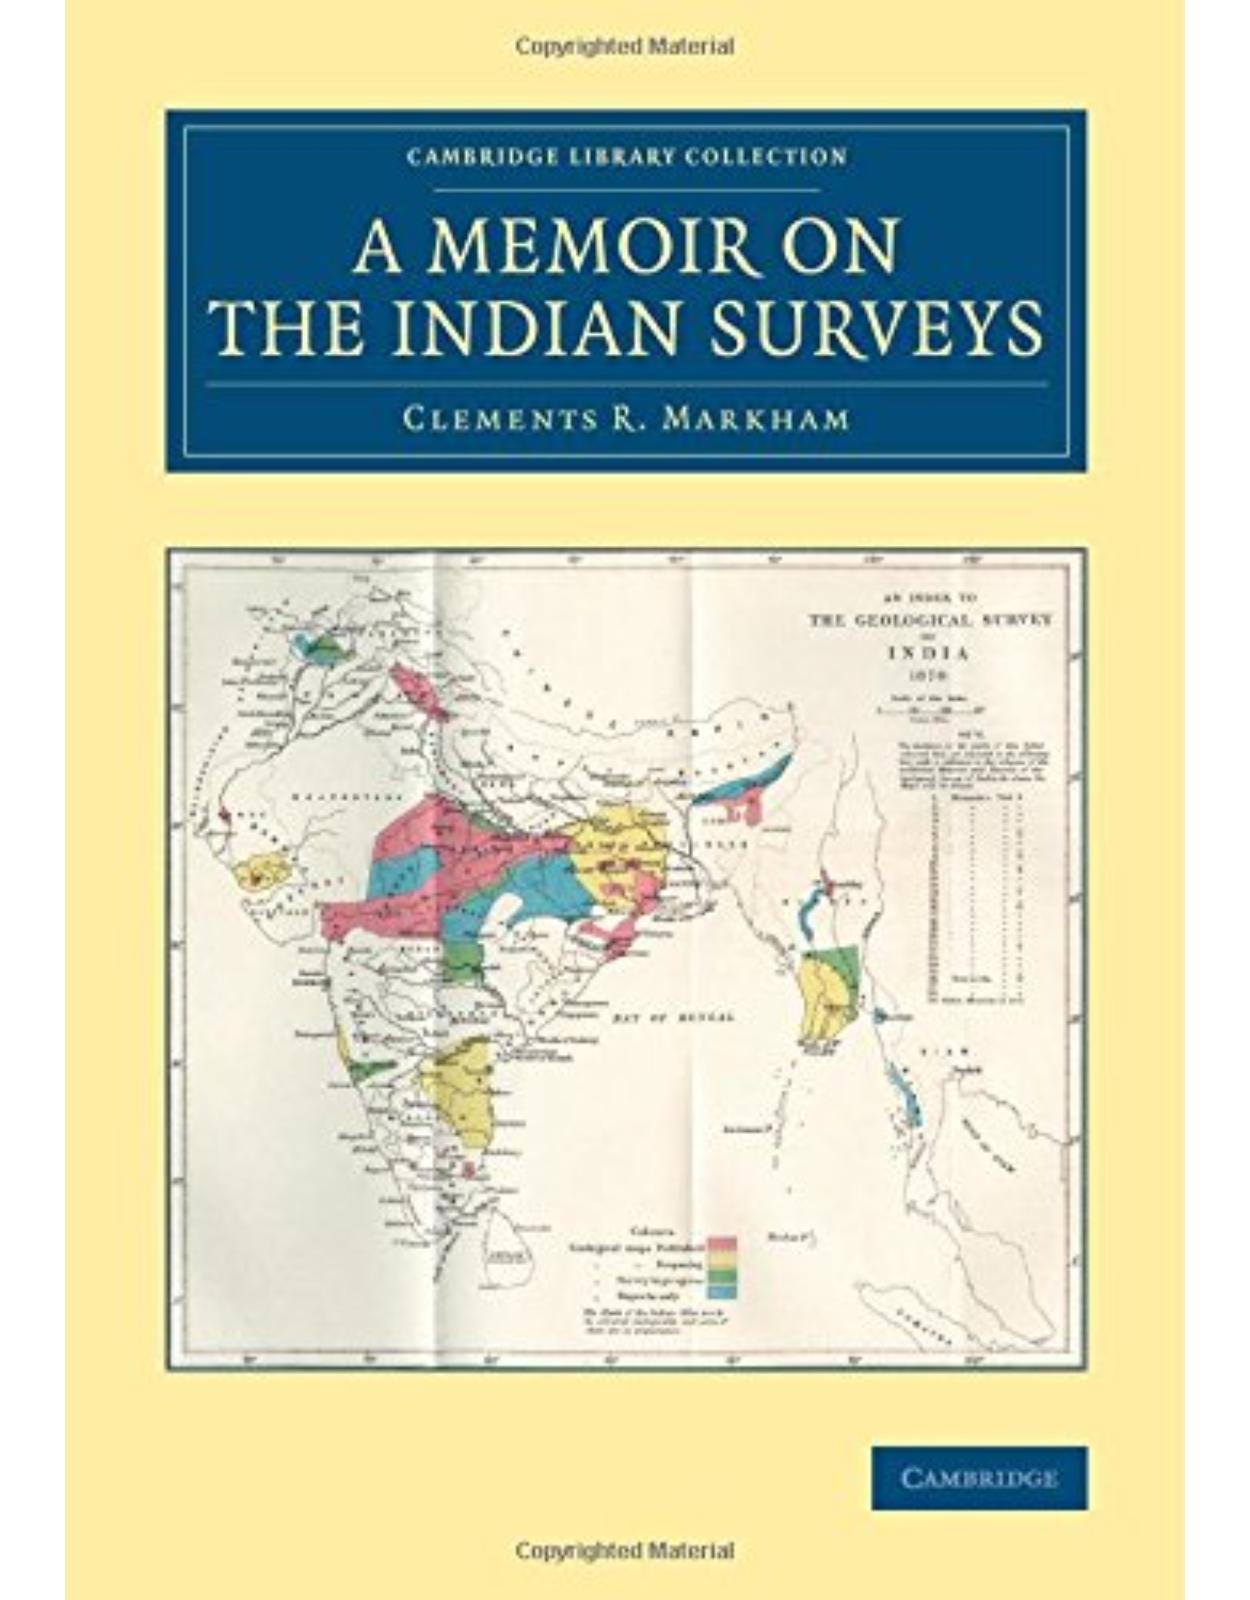 A Memoir on the Indian Surveys (Cambridge Library Collection - South Asian History)